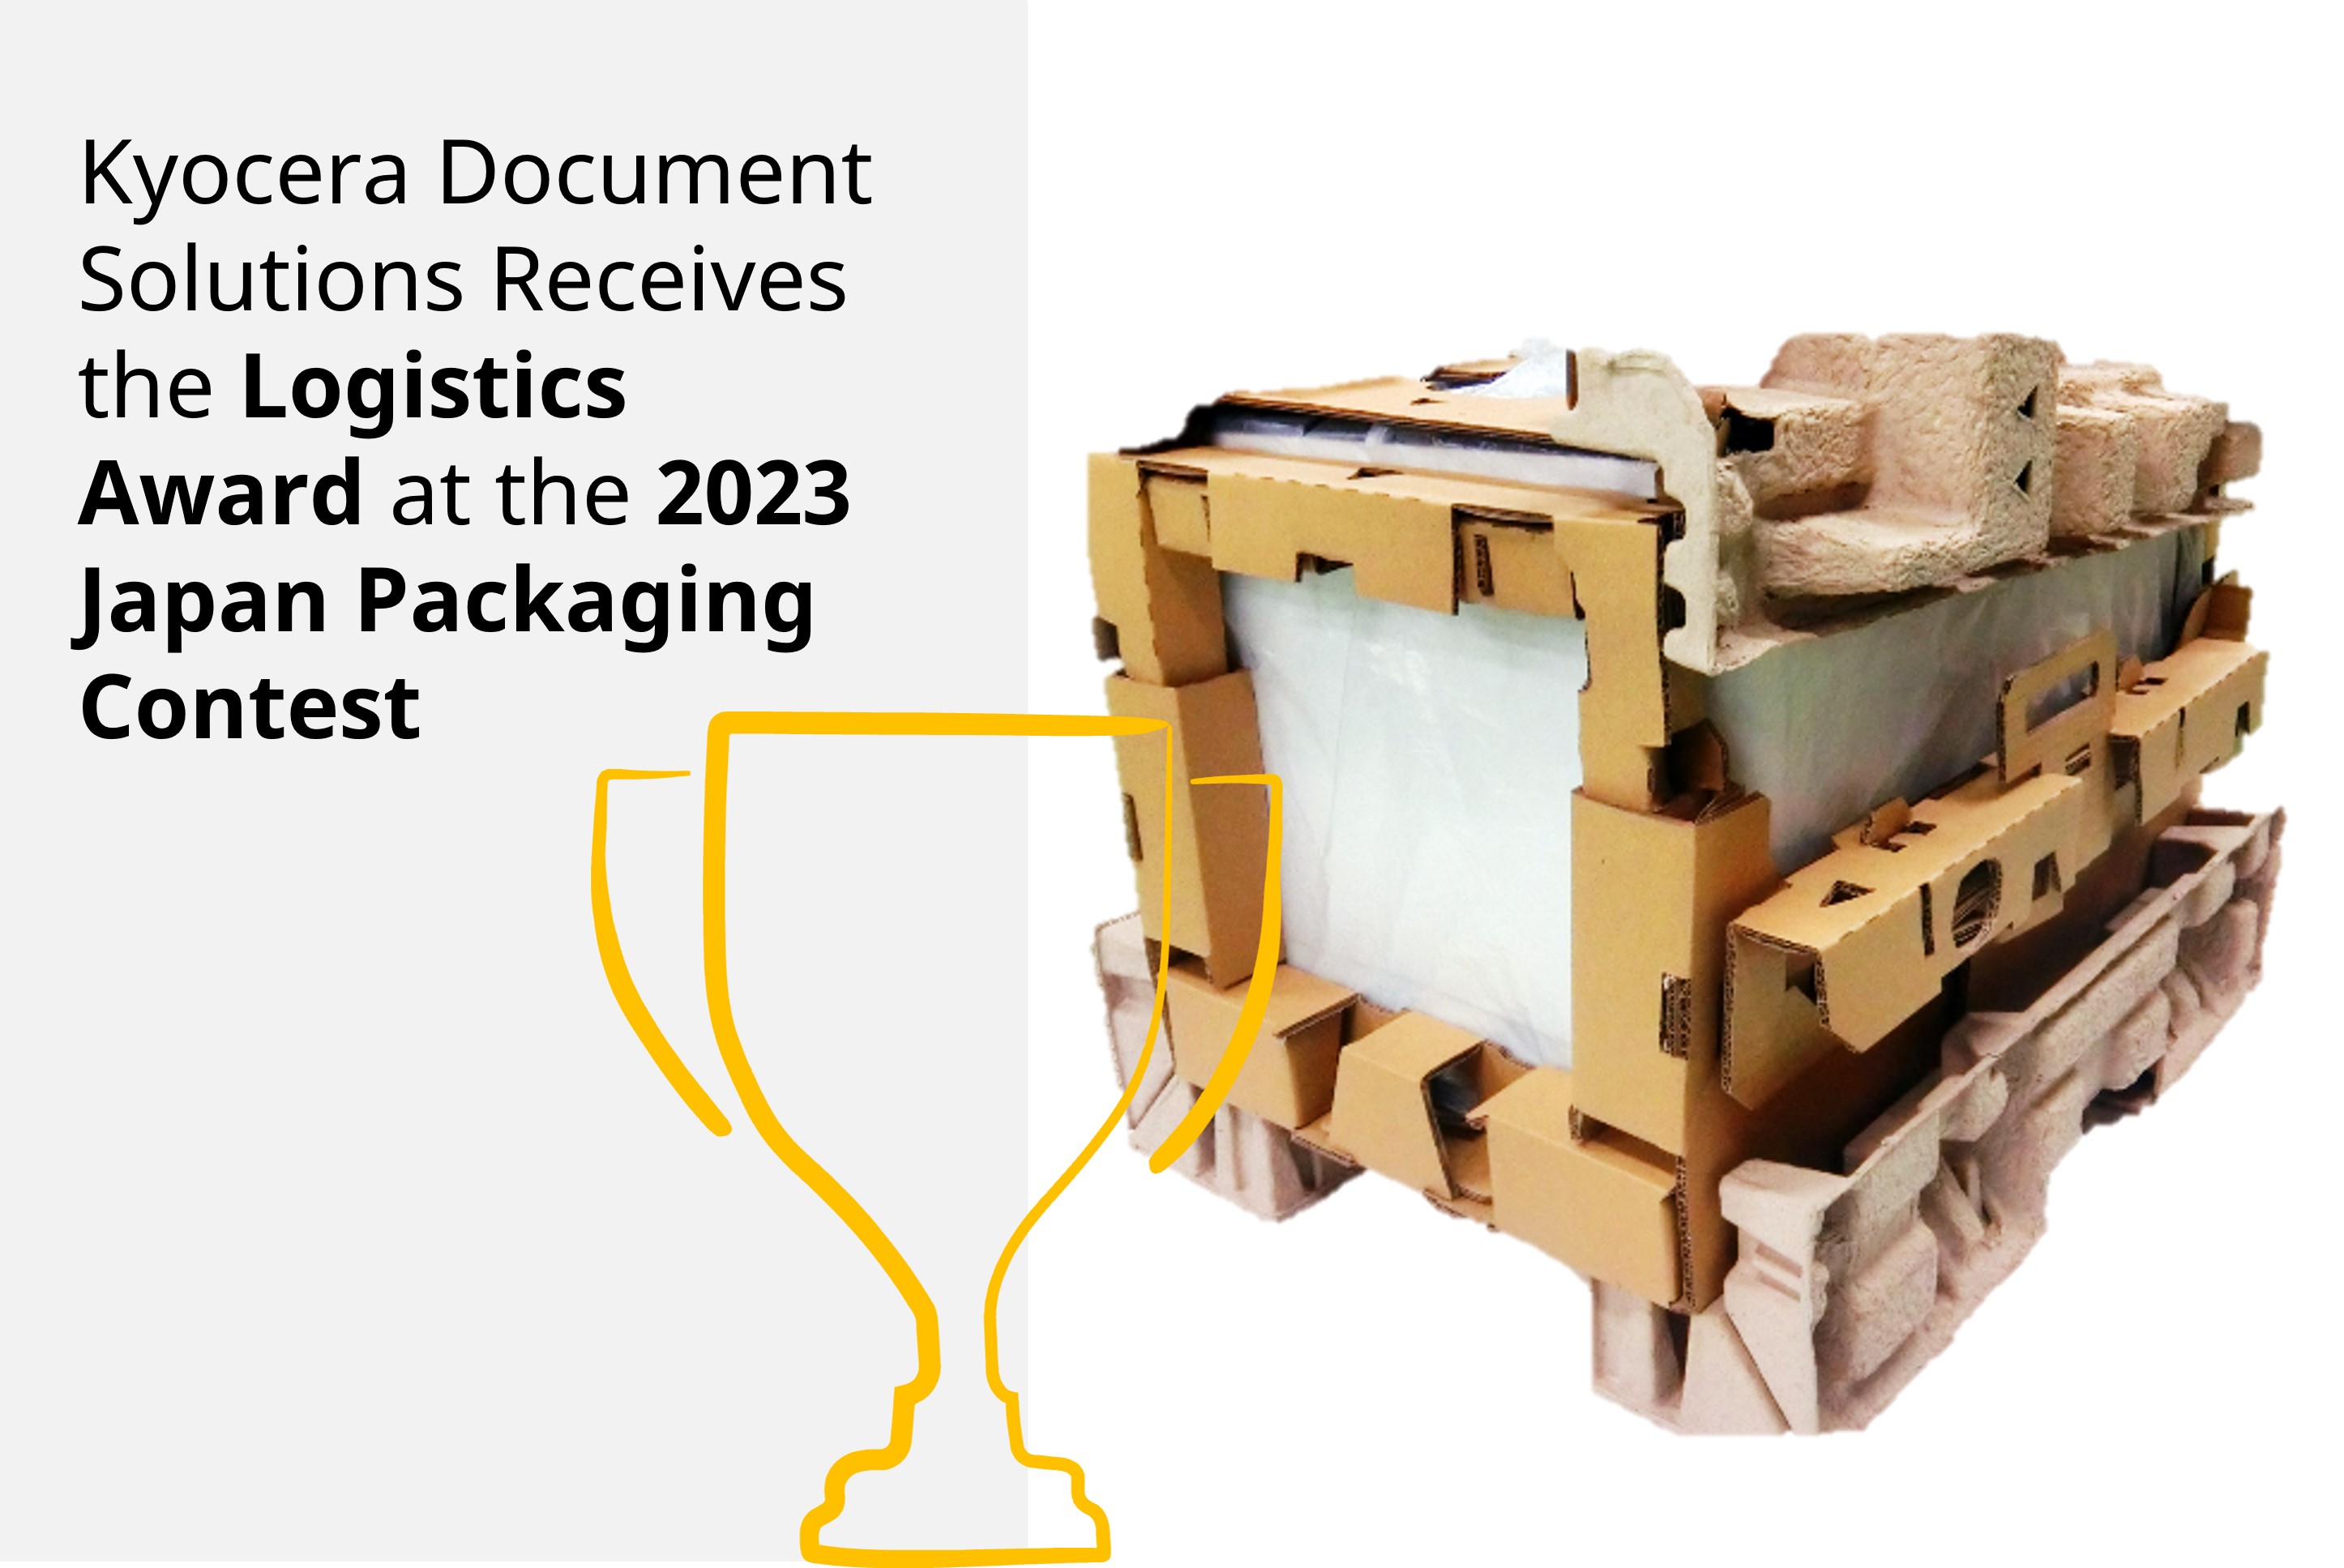 Kyocera Document Solutions, 2023 일본 패키징 콘테스트에서 물류 부문 수상